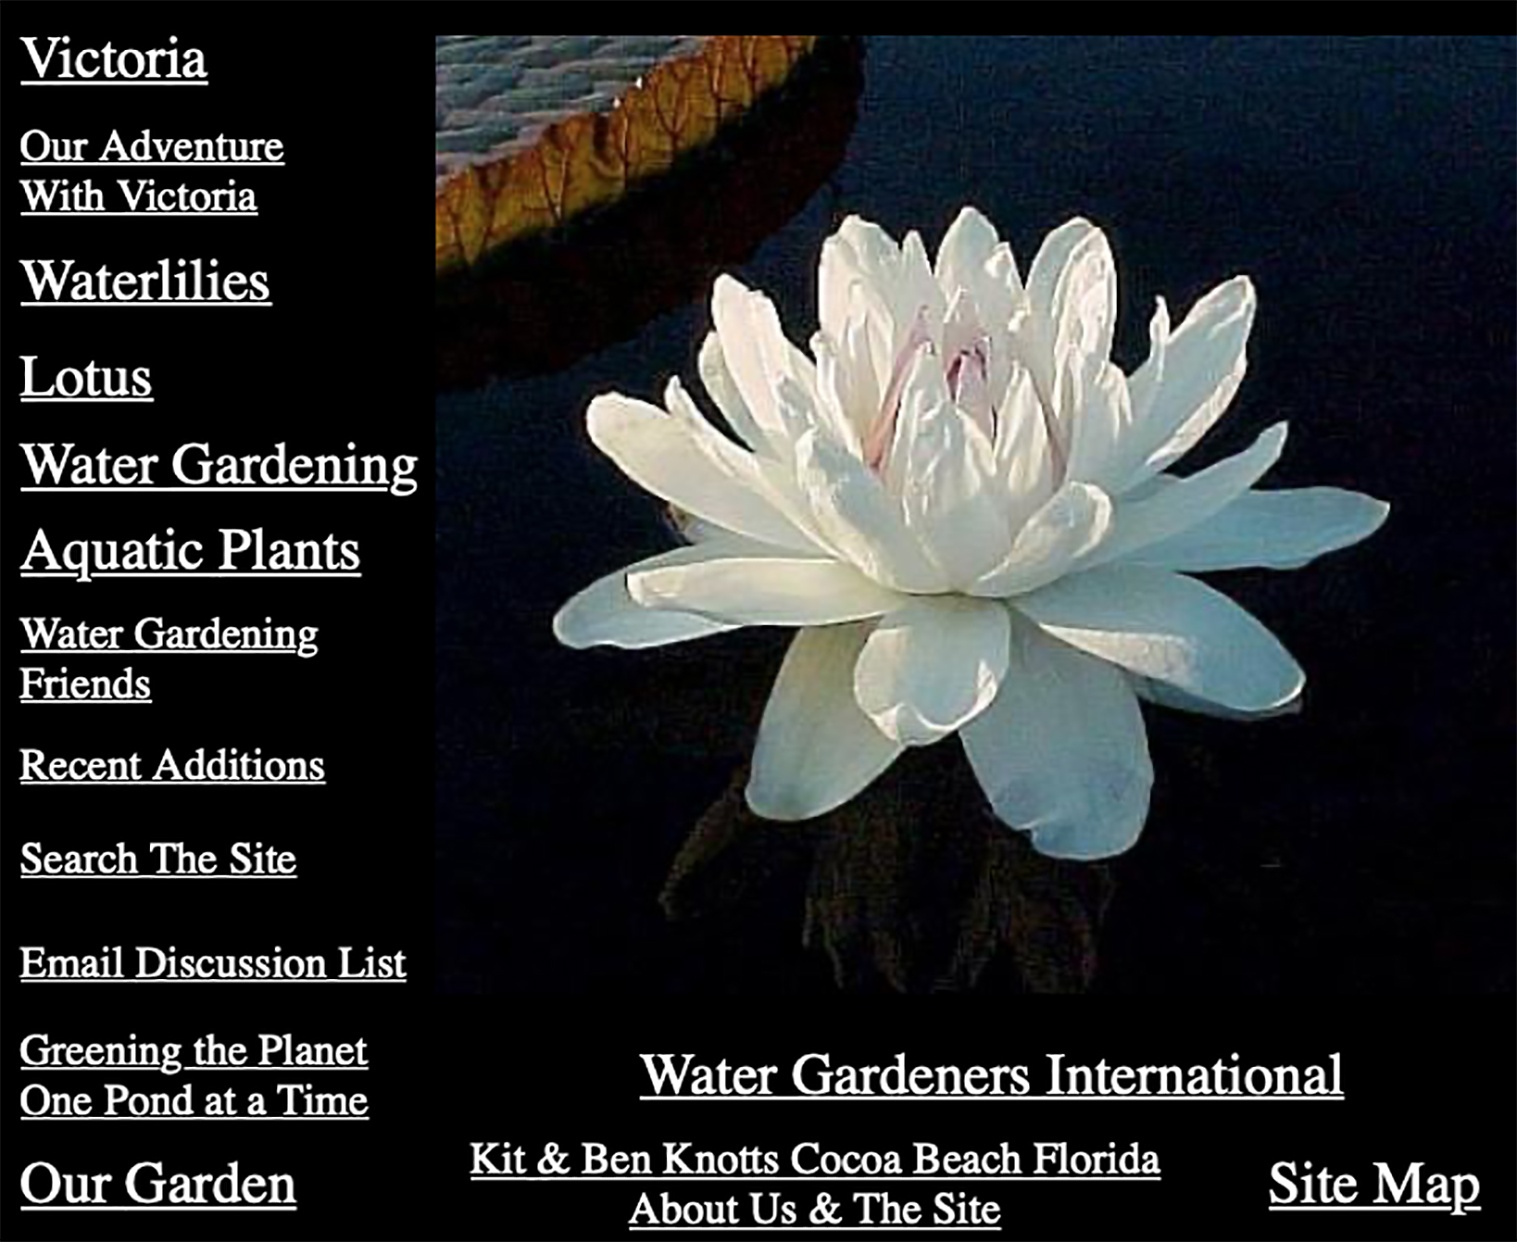 Website waterlilies